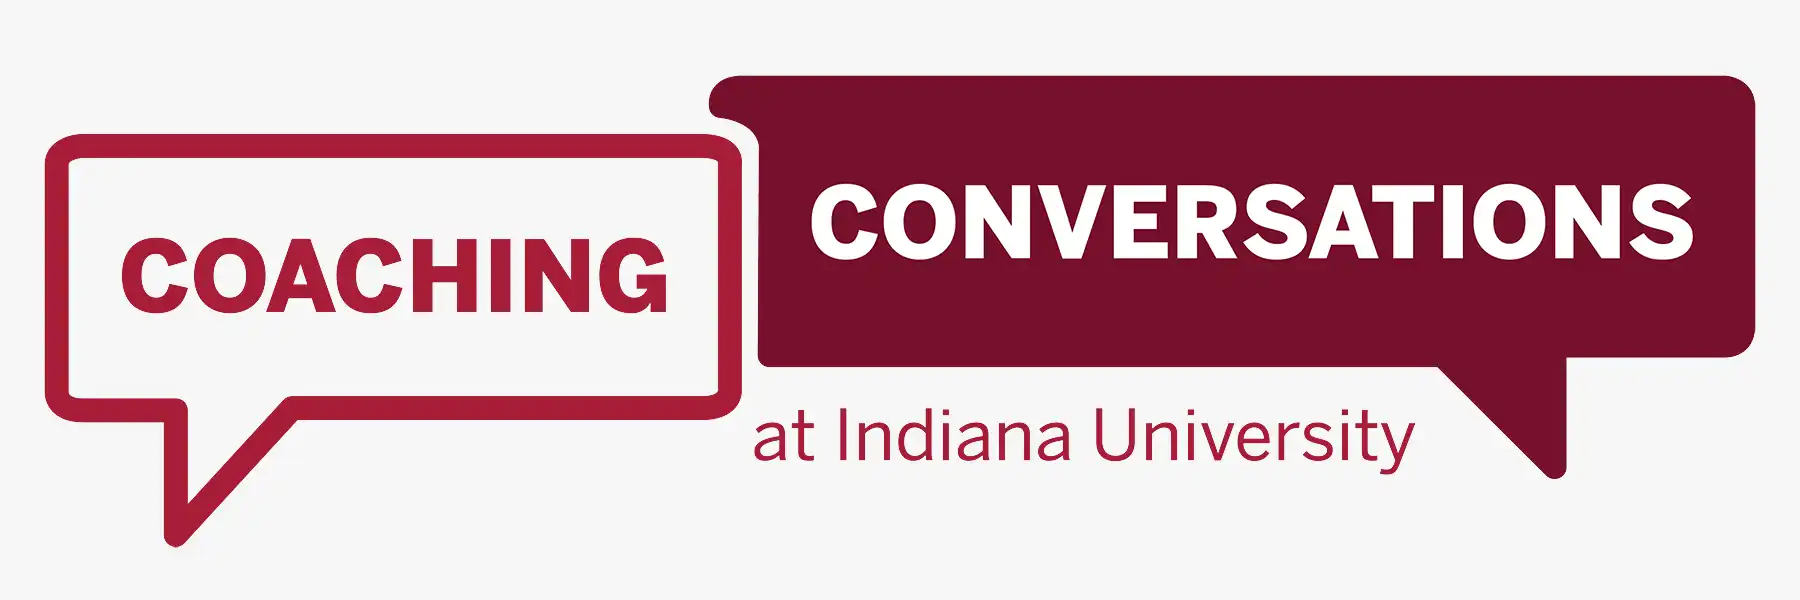 Coaching Conversations at Indiana University